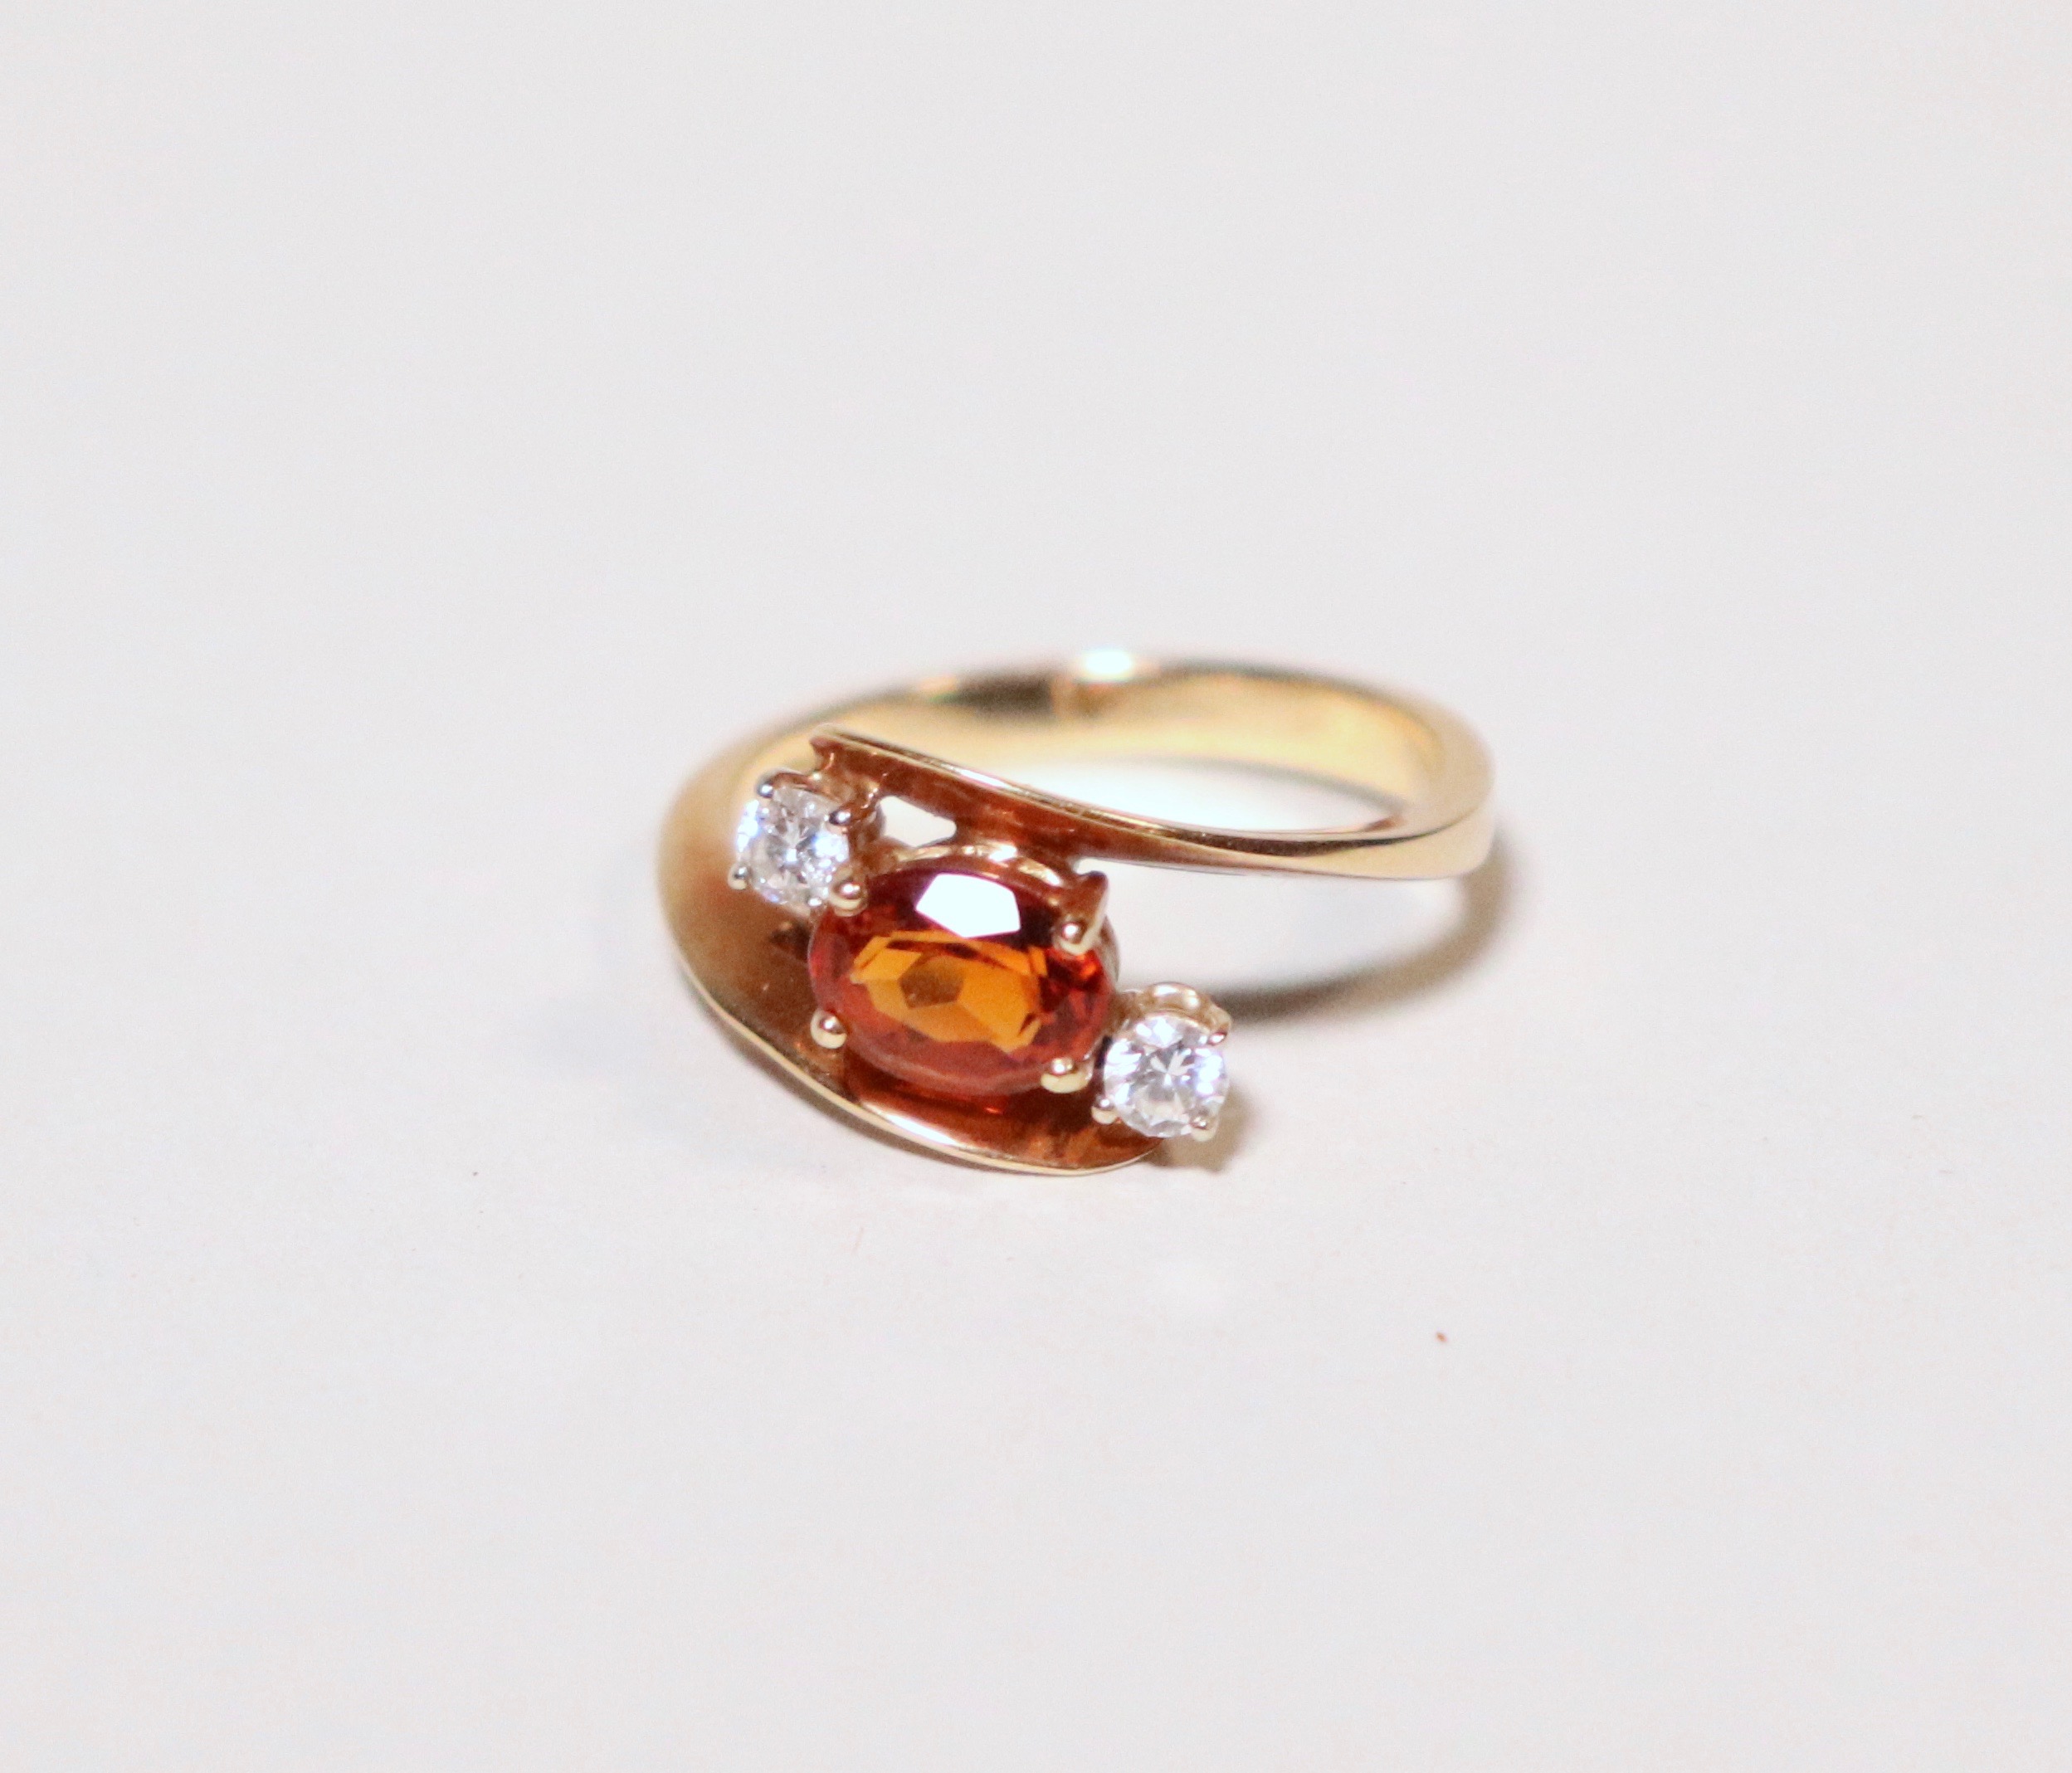 Market Square Jewelers Sparkling Orange and White Diamond Belt Buckle Ring